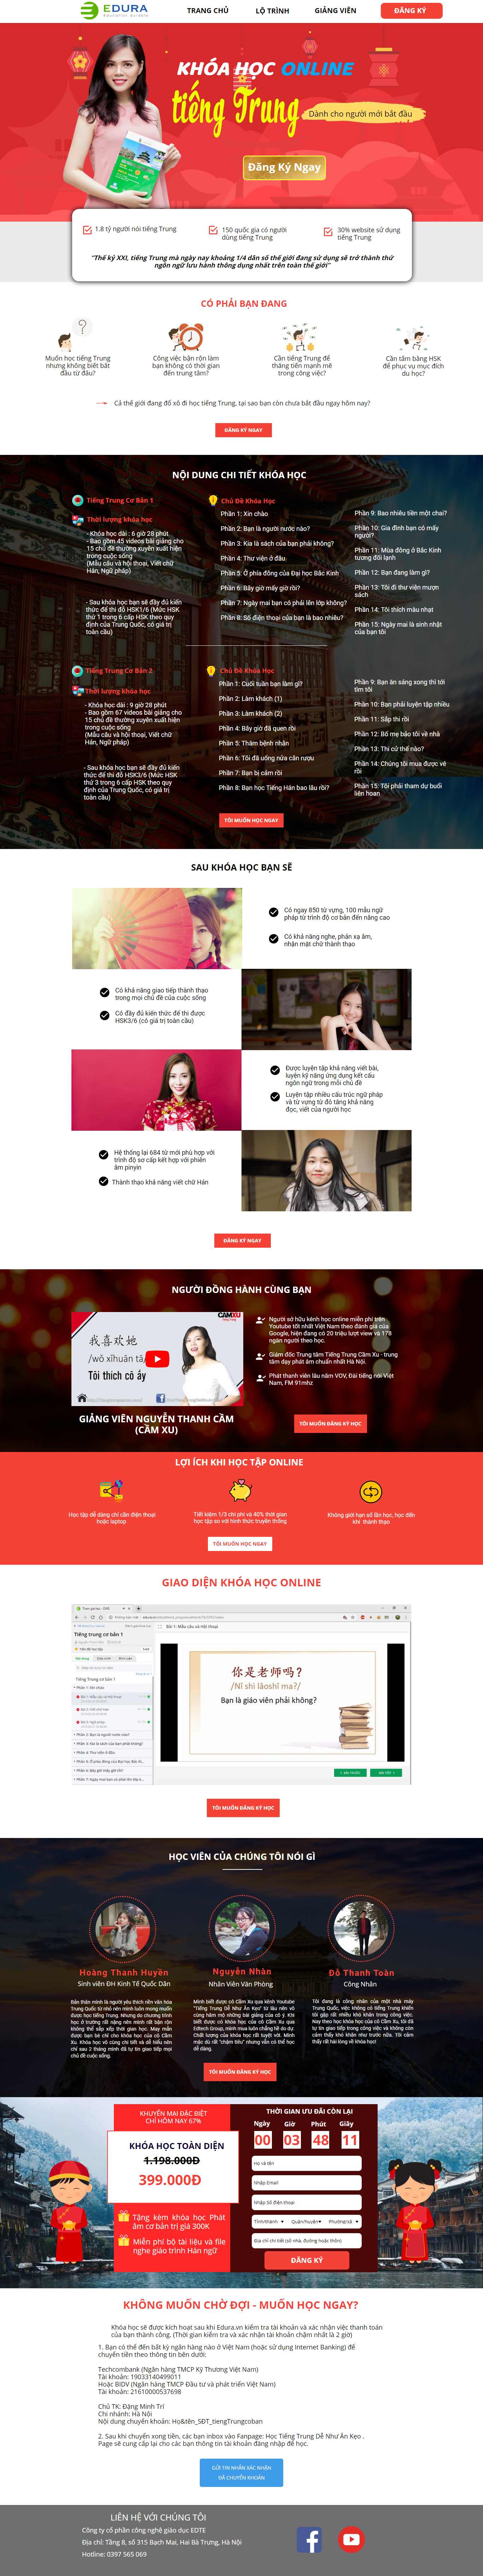 Thiết kế Website khóa học online - tiengtrungonline01.edura.vn